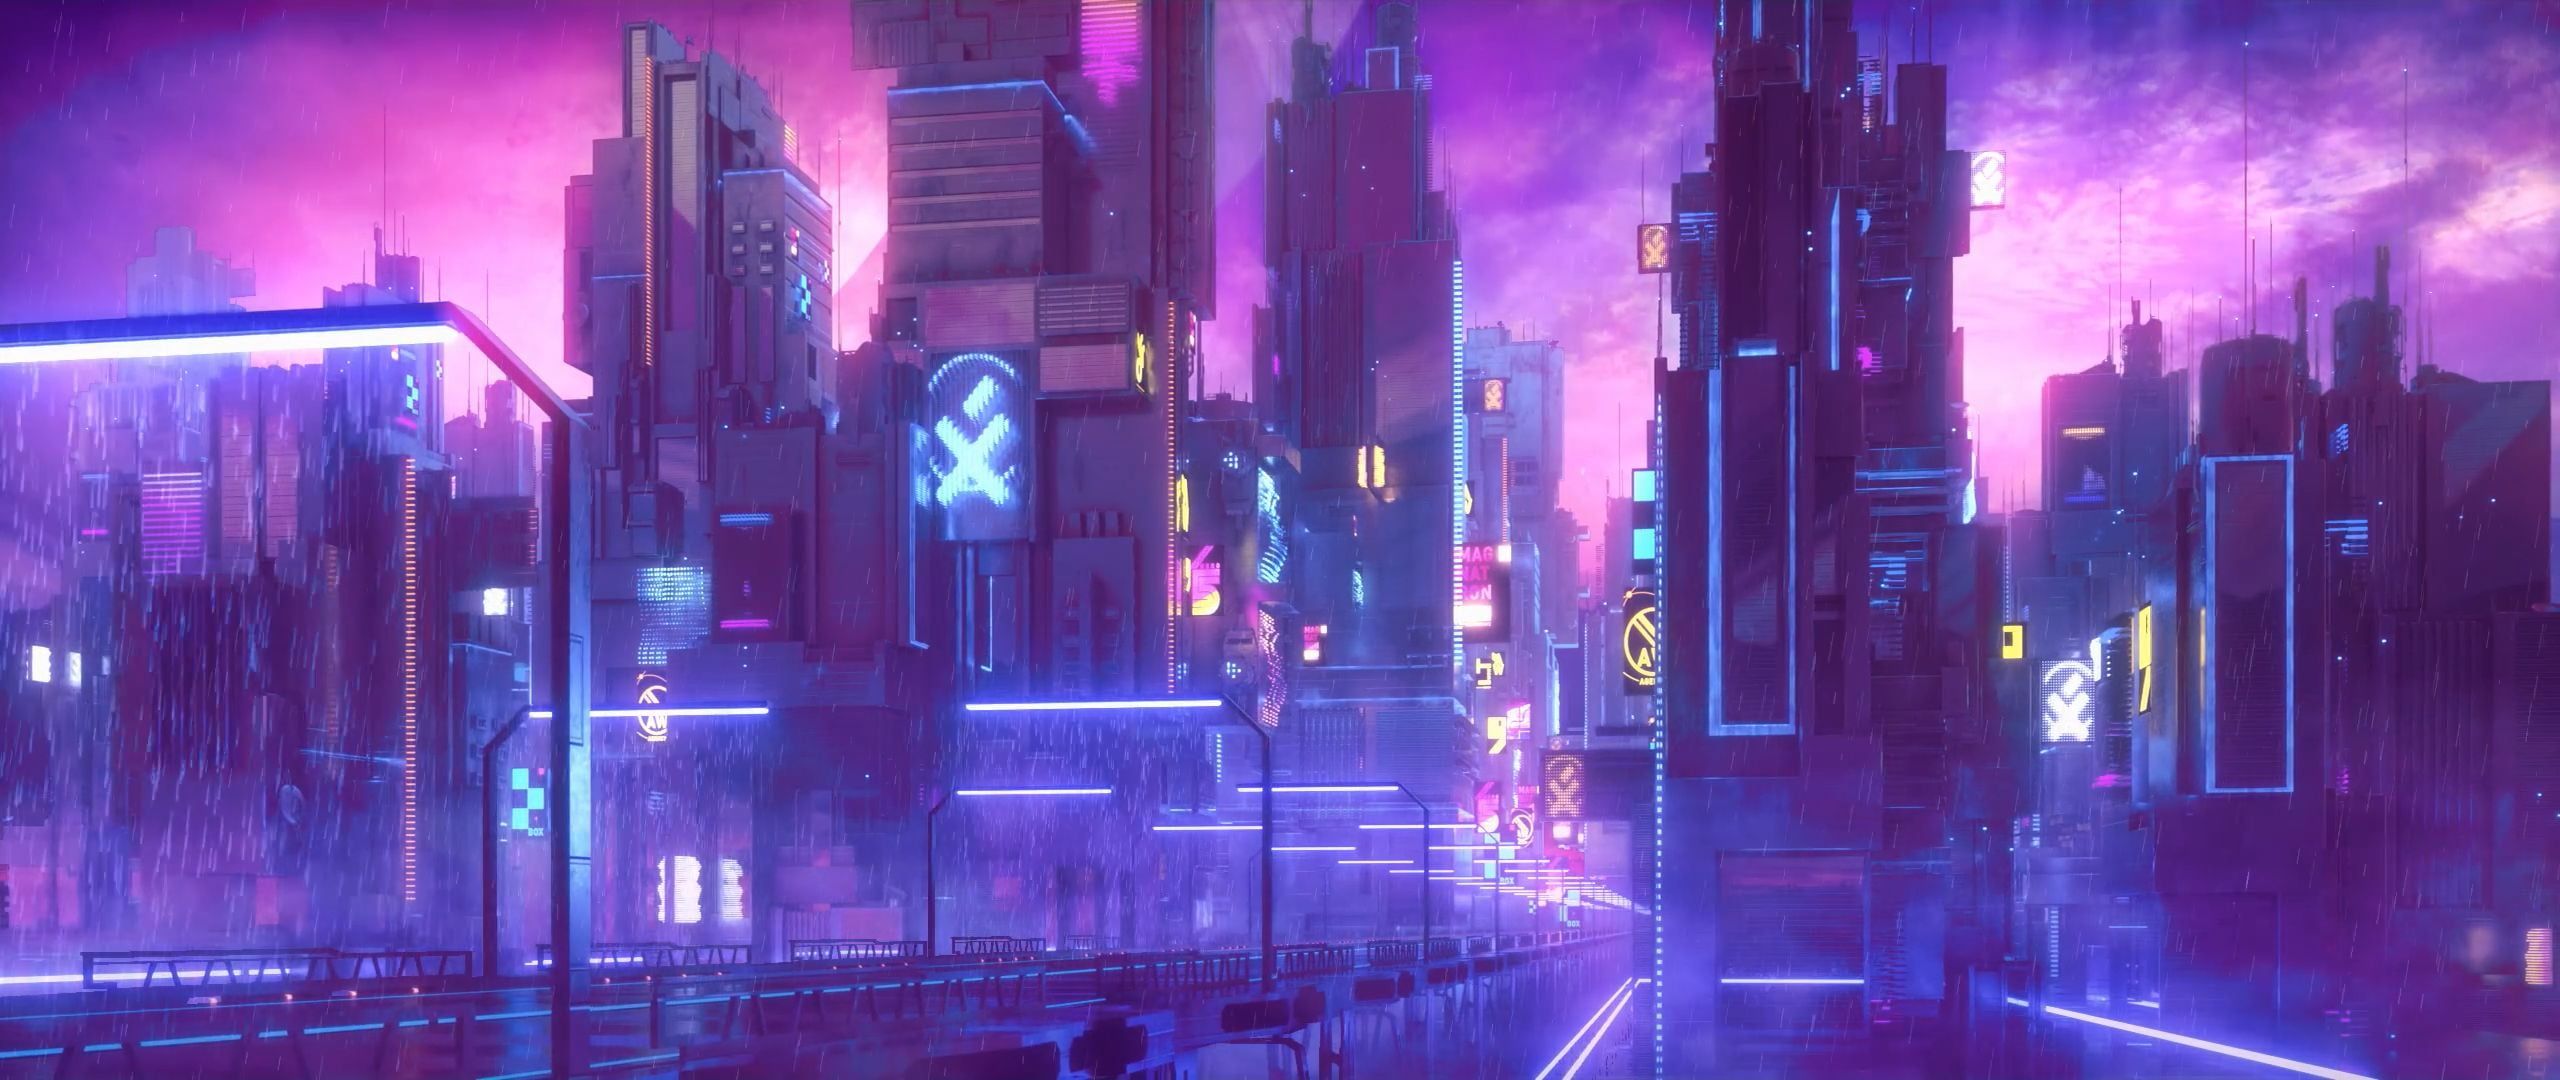 Cyberpunk neon city wallpapers